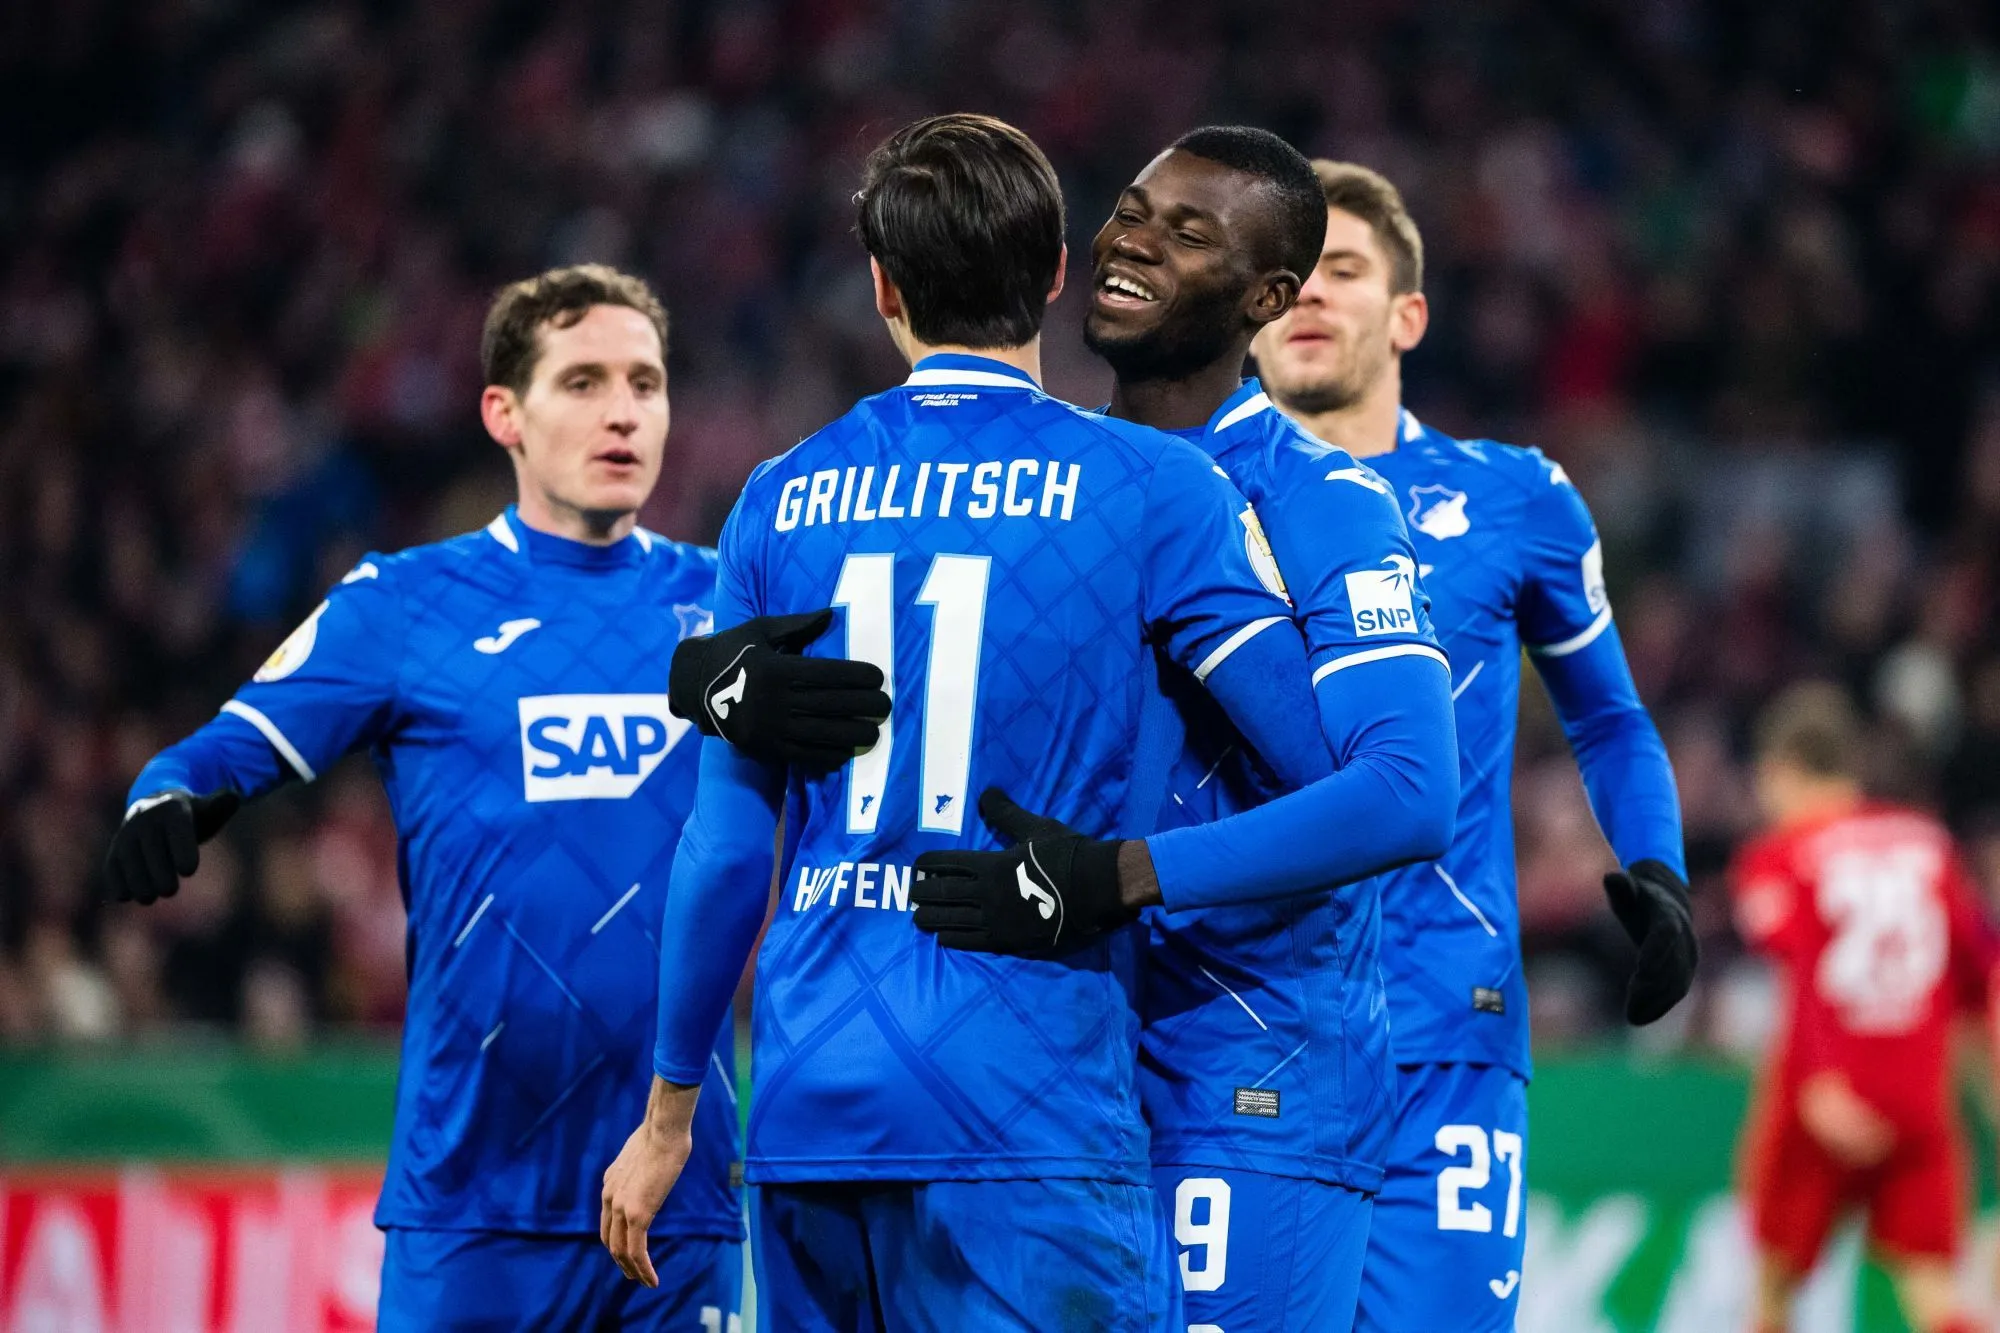 Pronostic Dusseldorf Hoffenheim : Analyse, prono et cotes du match de Bundesliga